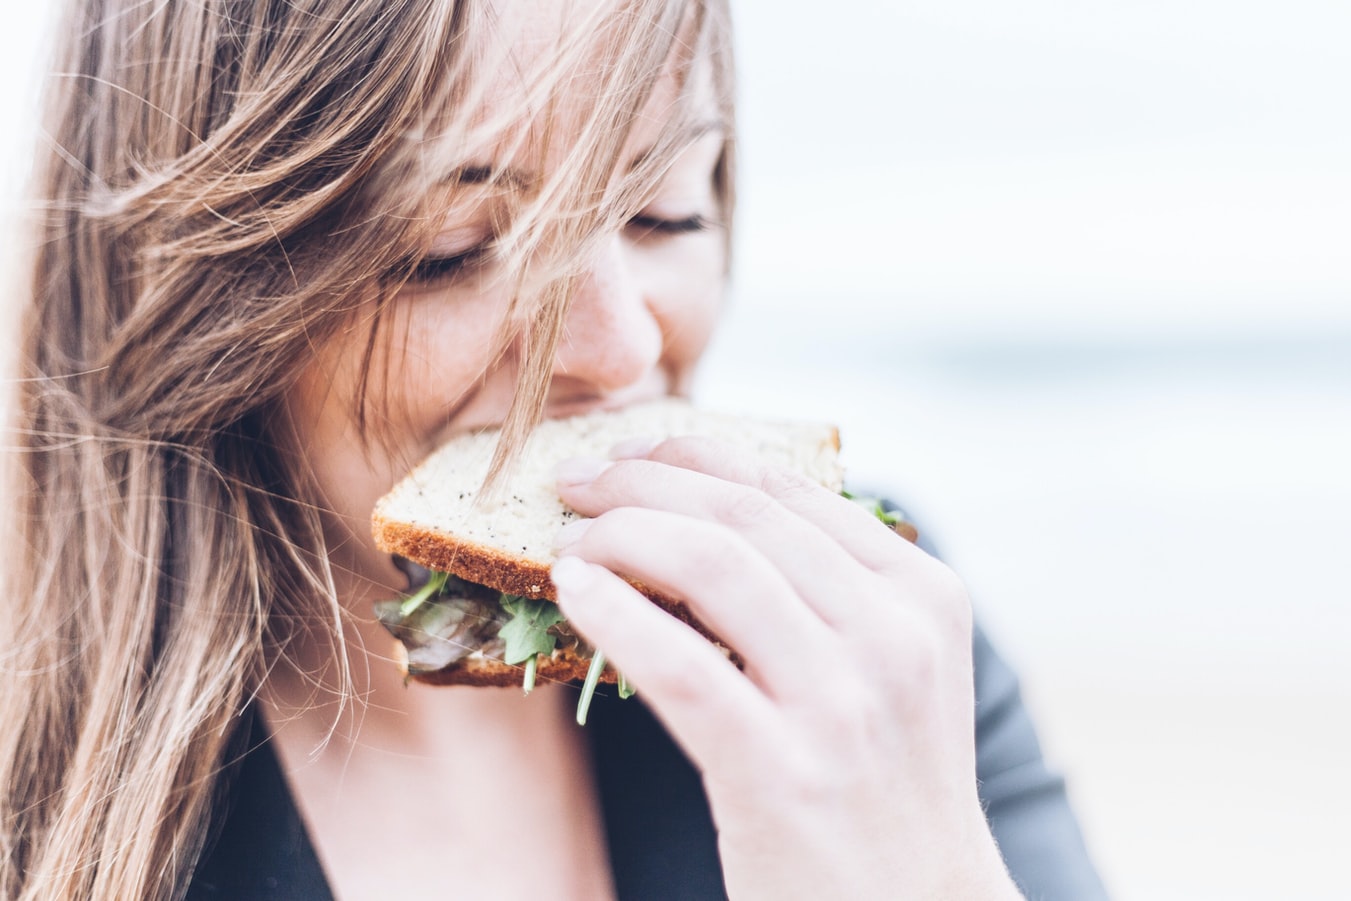 A woman eats a sandwich for lunch.